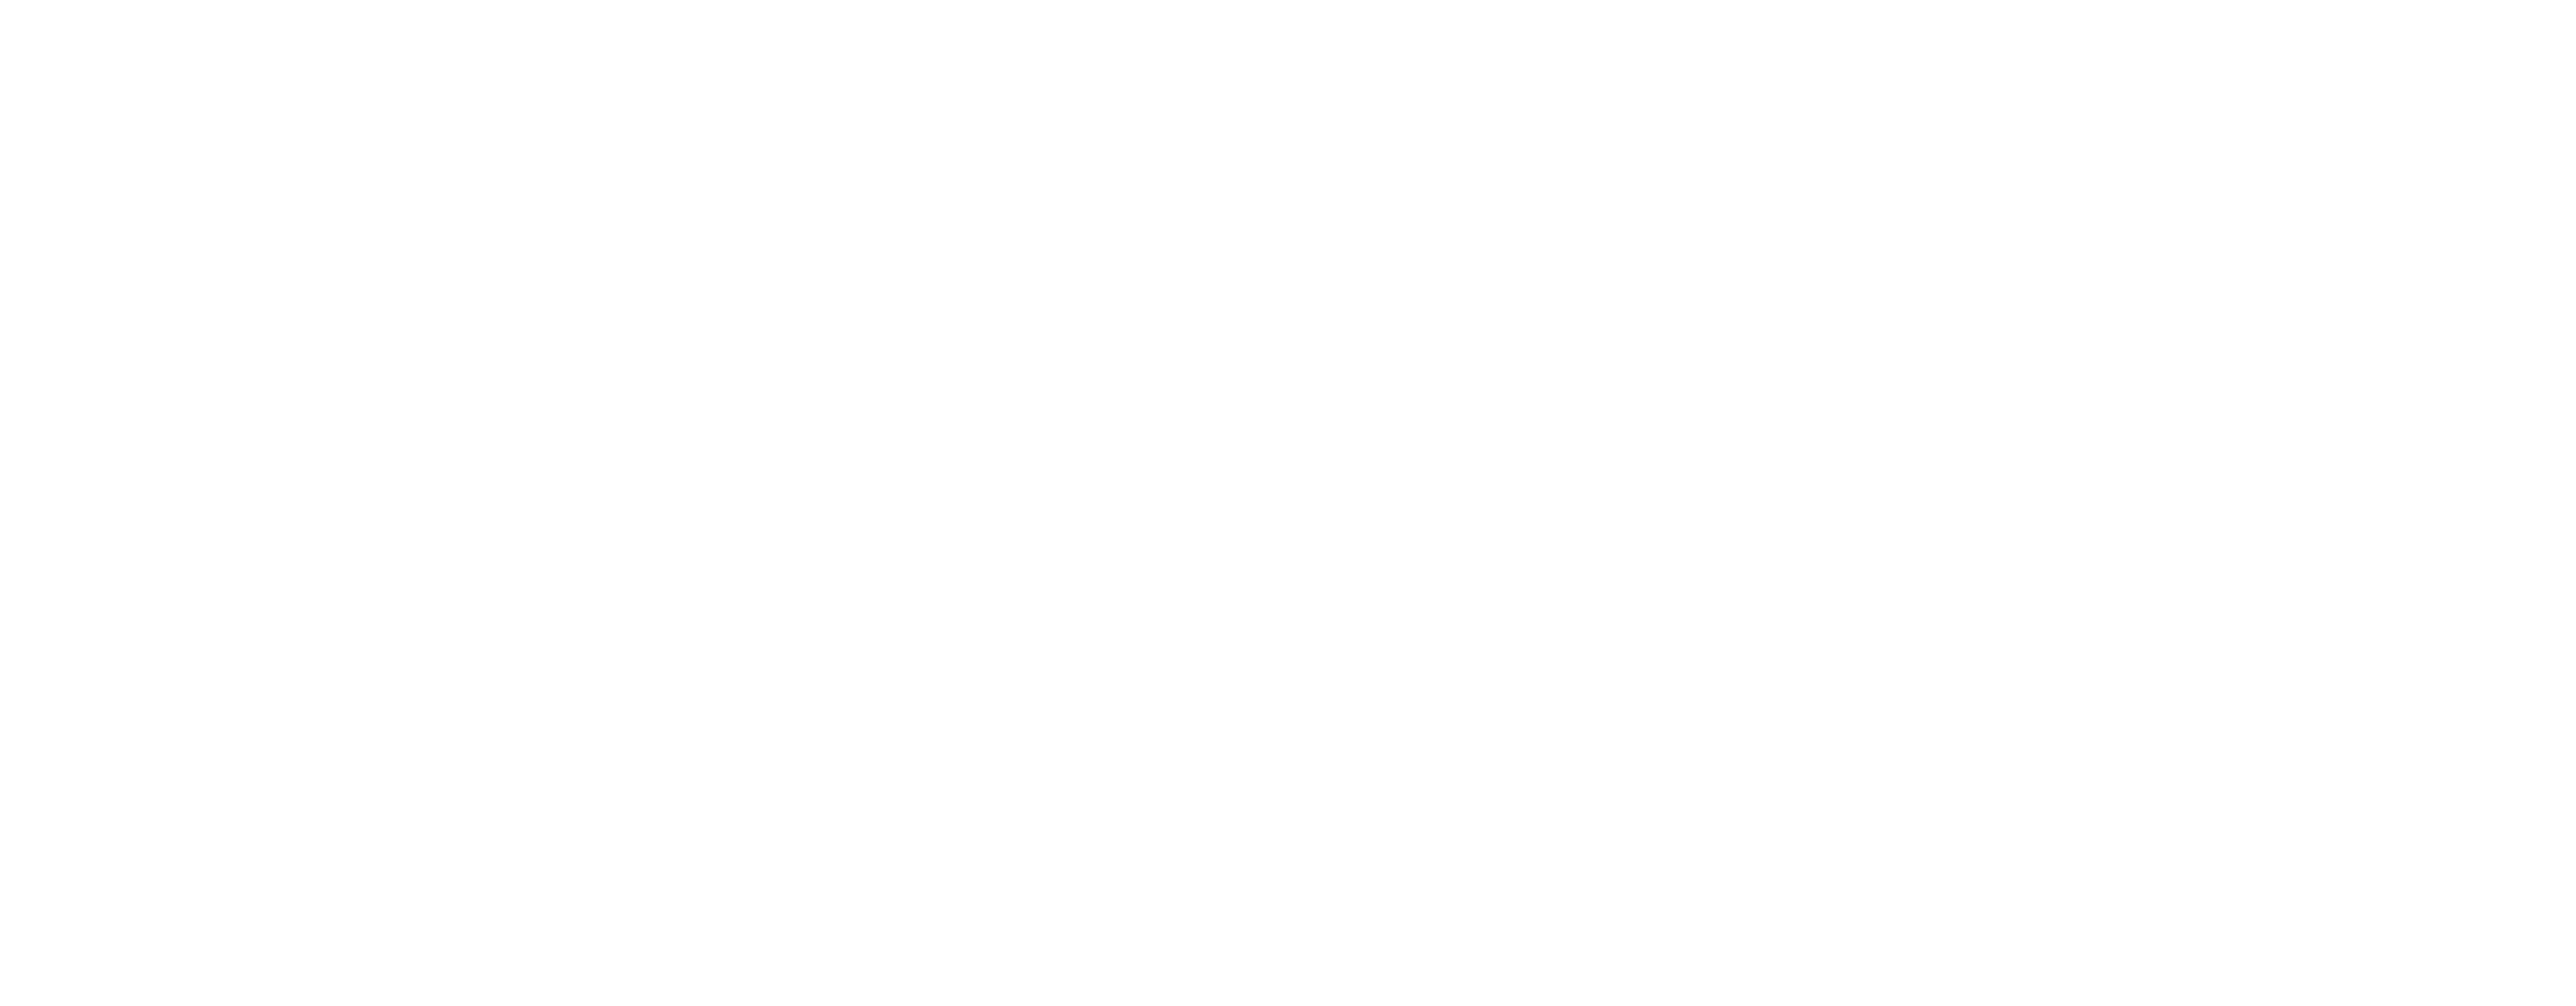 teachx logo